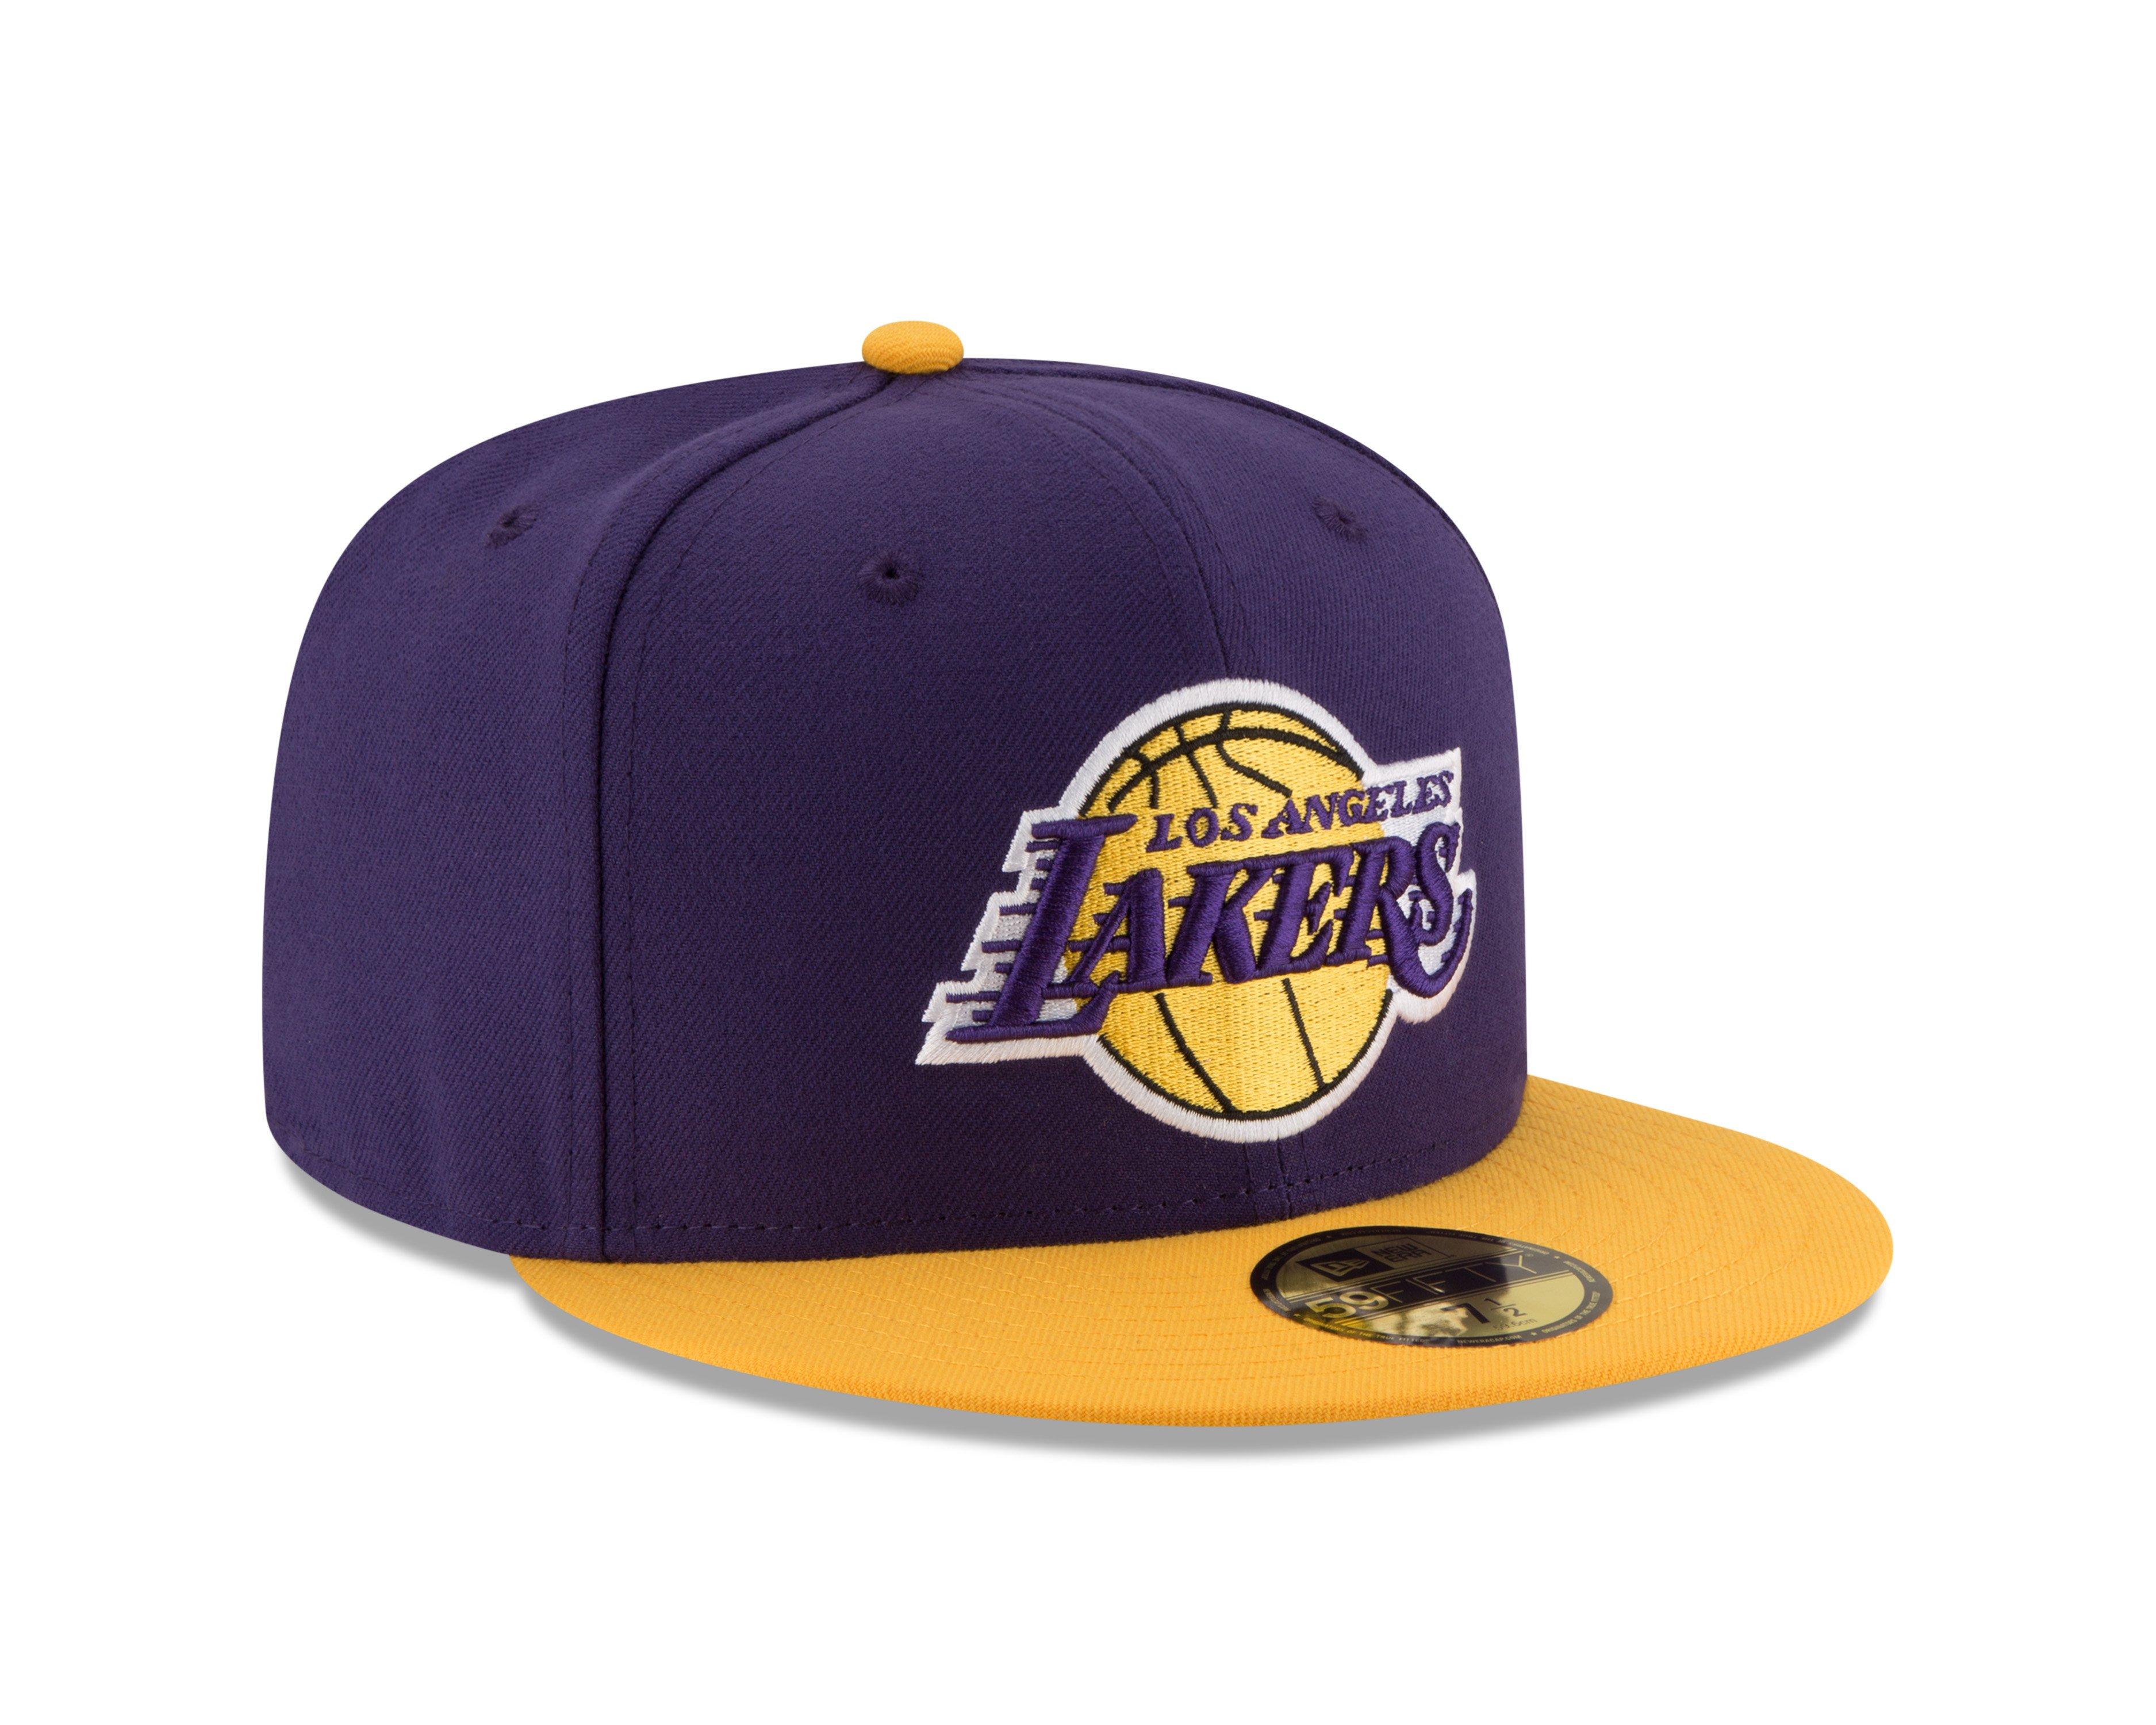 Los Angeles Lakers New Era Hoop Team 2 9FIFTY Snapback Hat - Light Blue